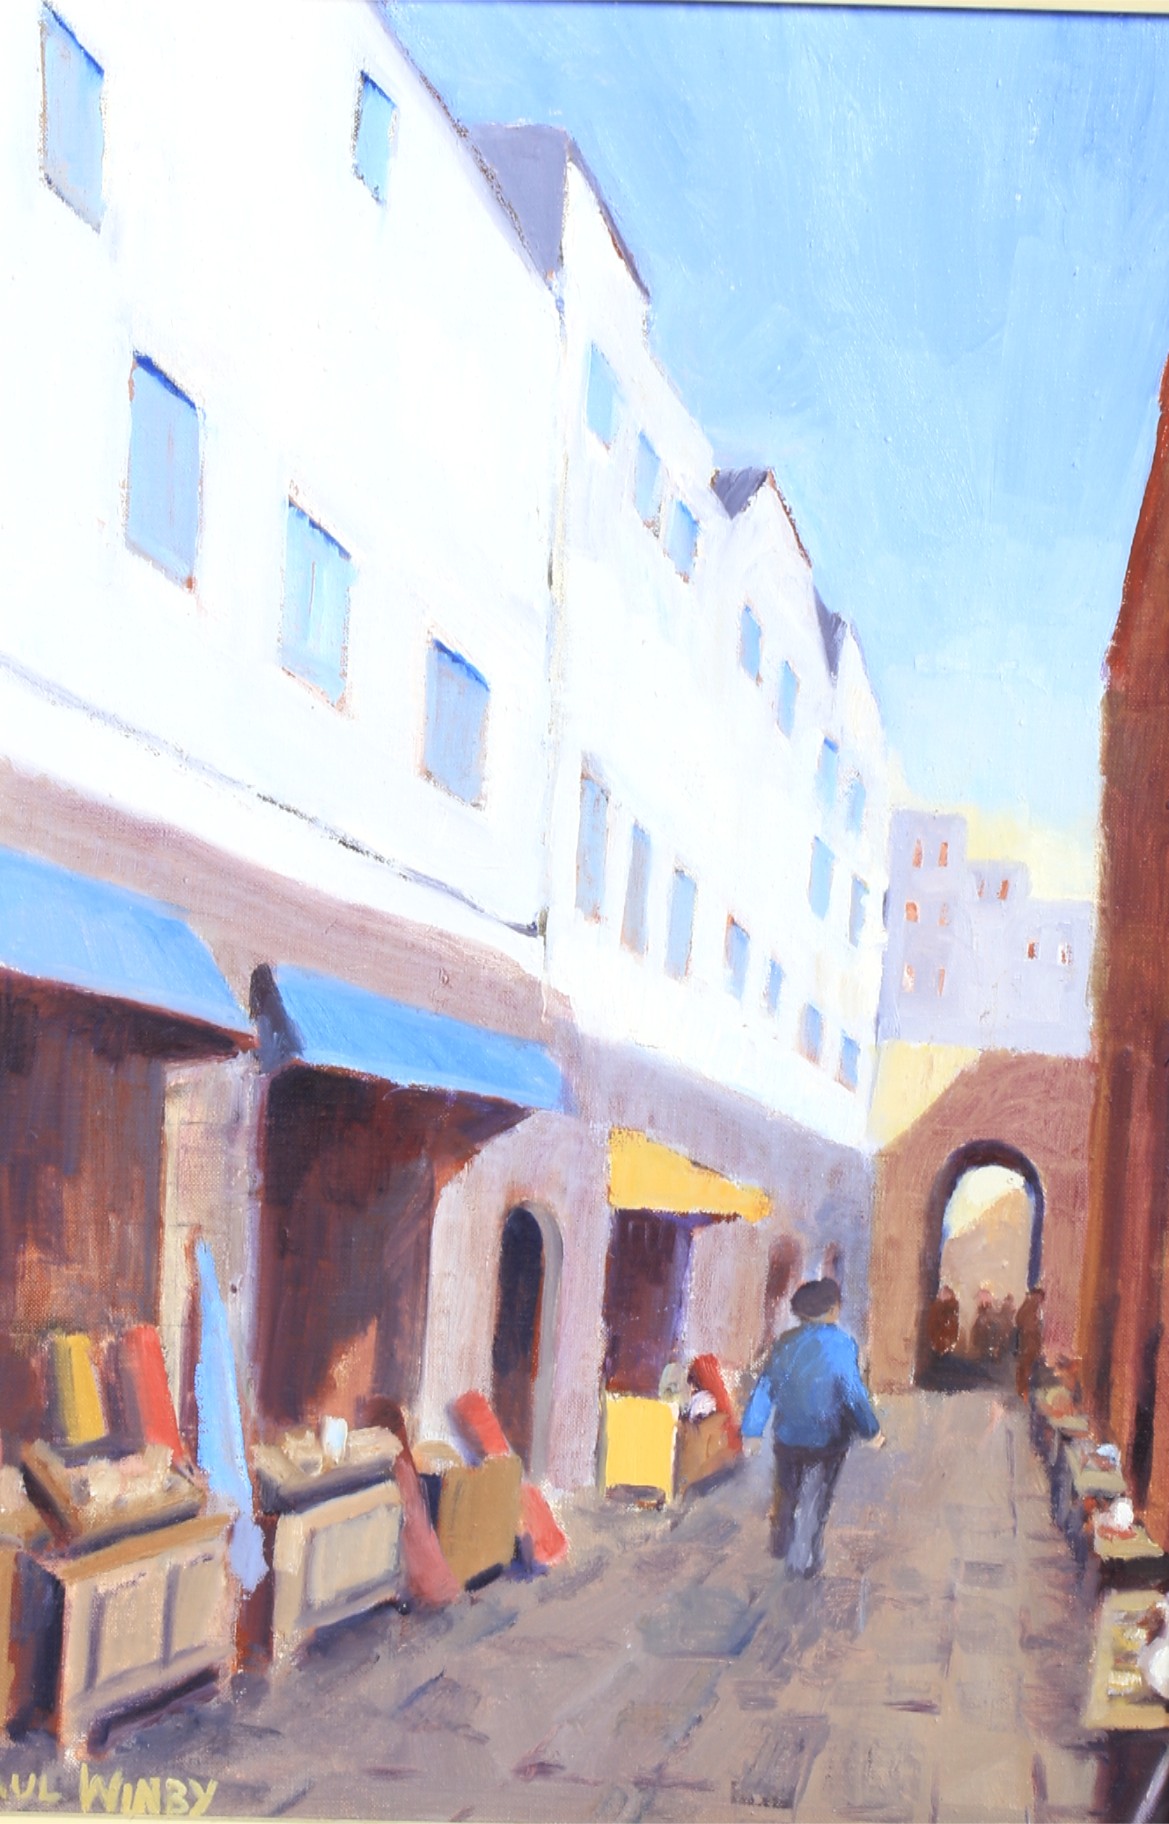 Paul Winby (20th/21st Century), Rue de la Scala, oil on canvas. - Image 3 of 3